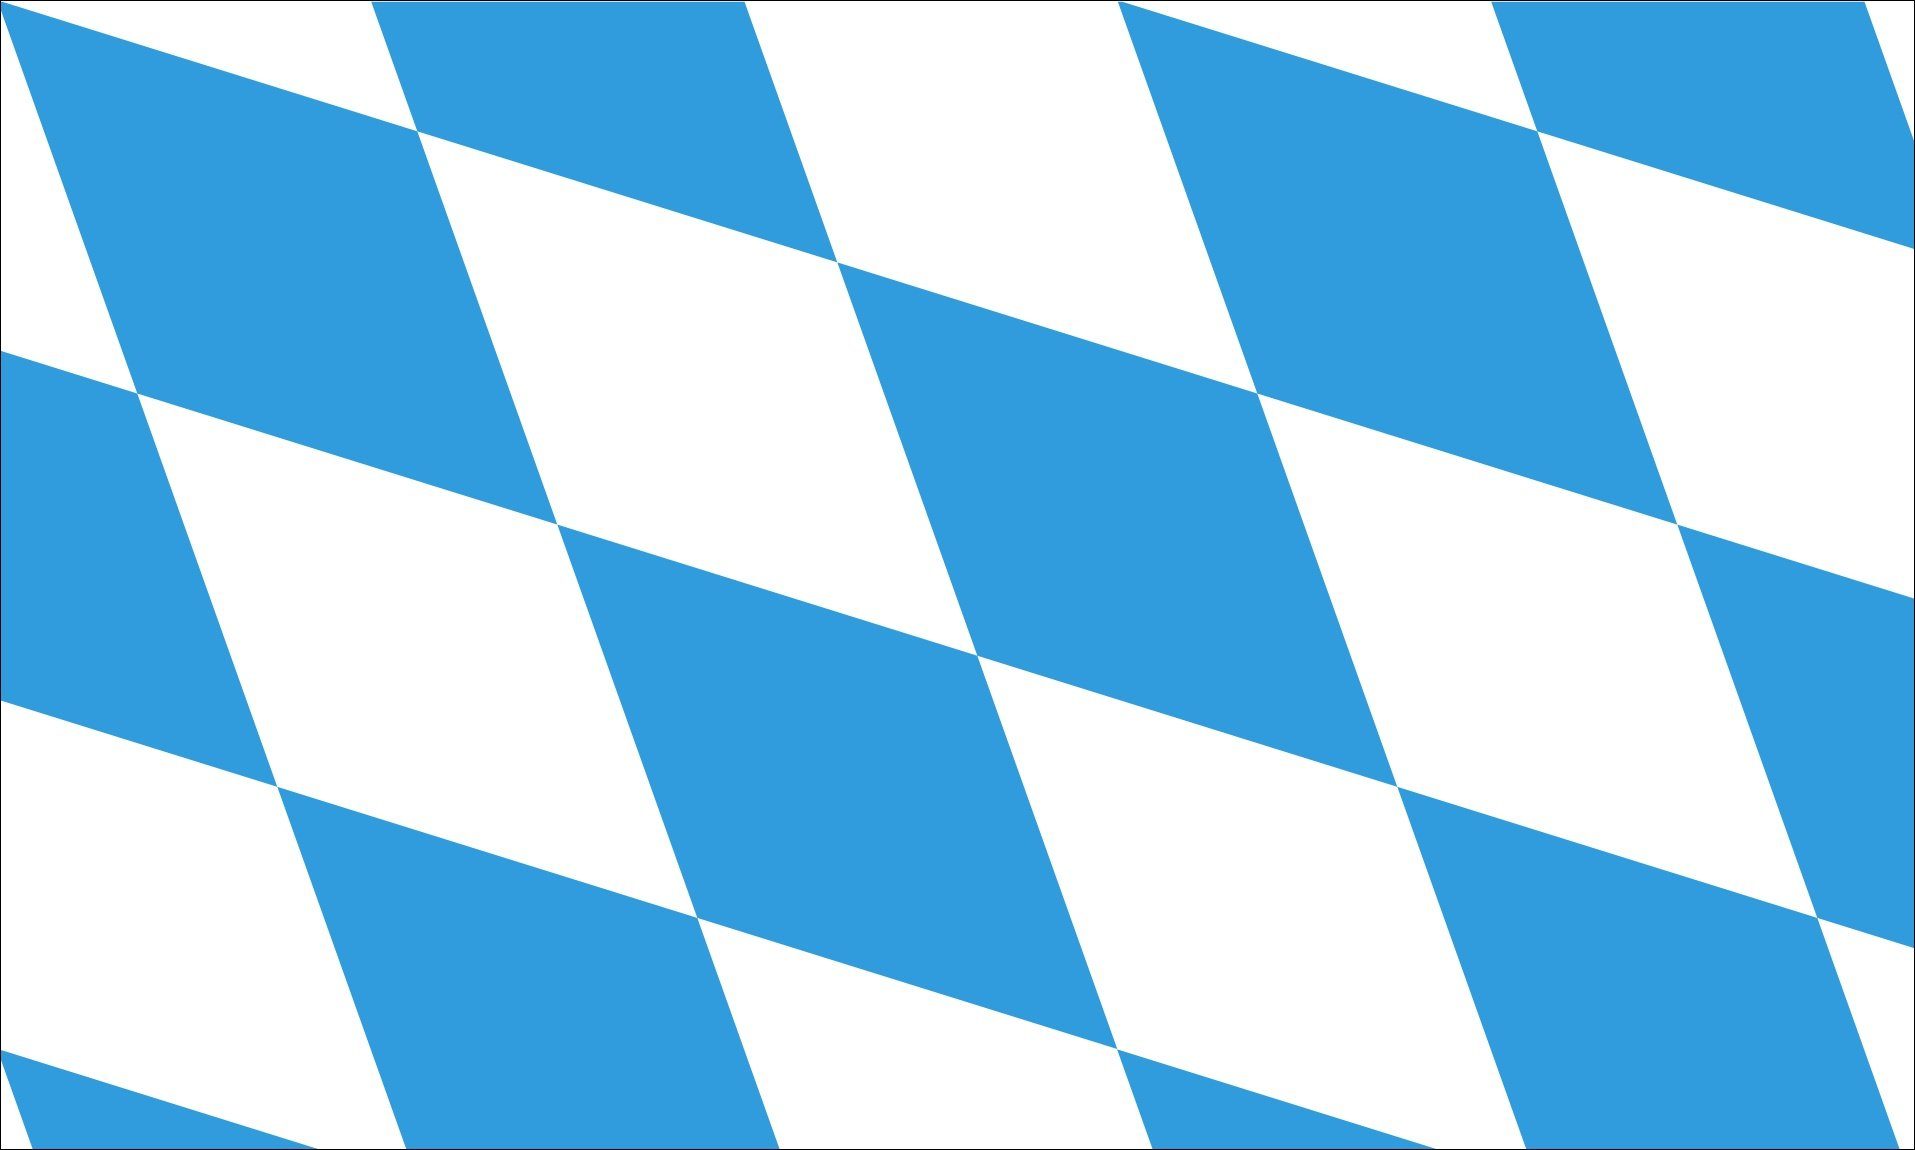 110 Querformat g/m² flaggenmeer Flagge Rauten Flagge große Bayern